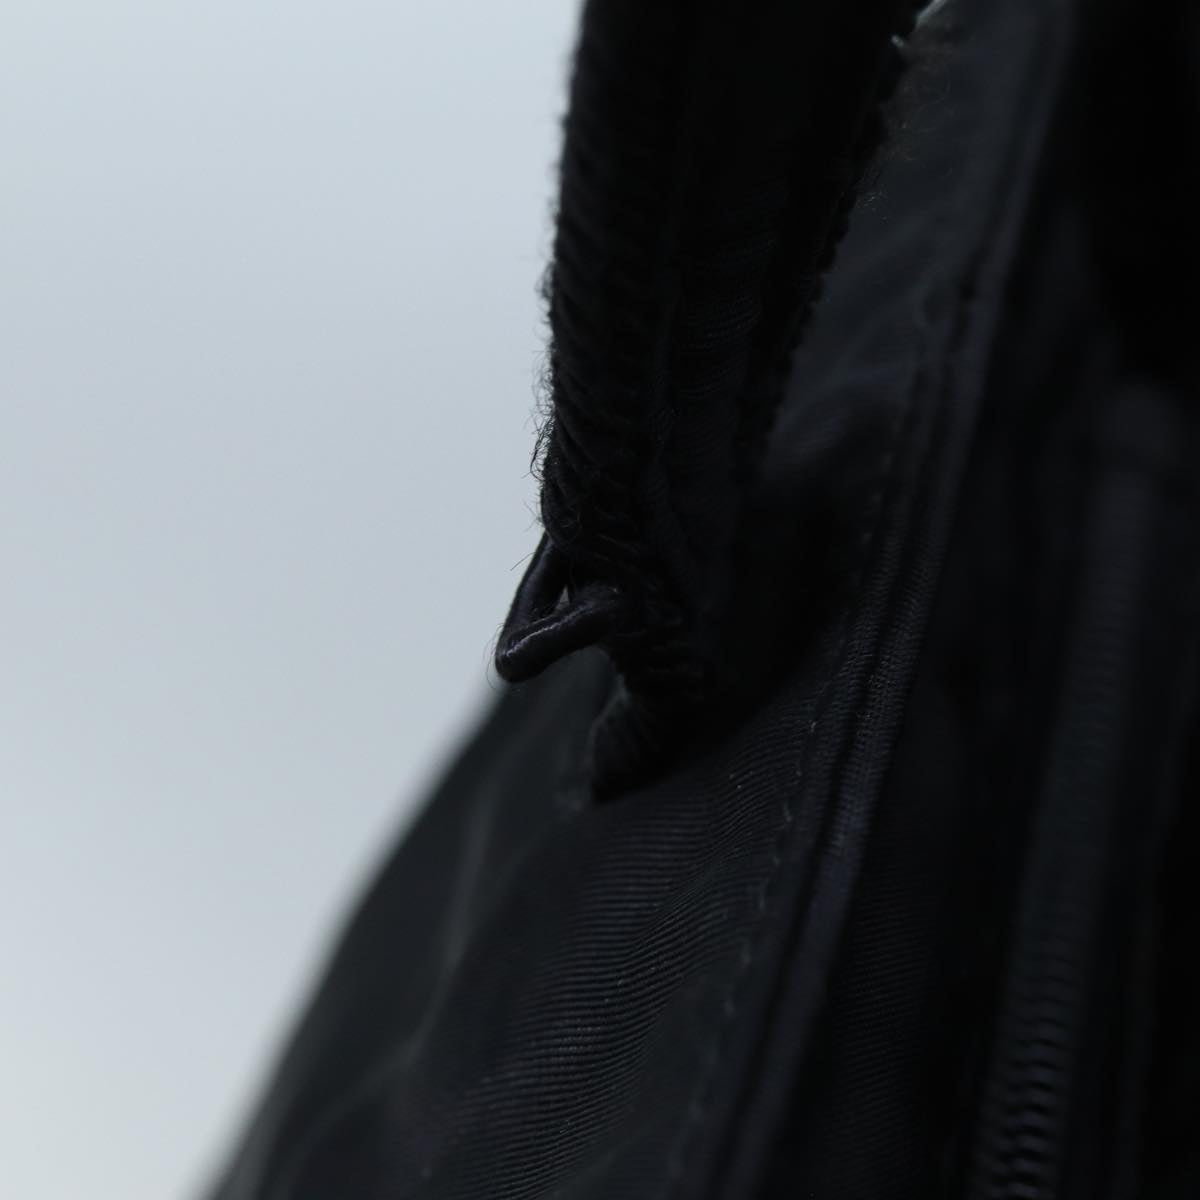 GIVENCHY PRADA Burberry Shoulder Bag Nylon Leather 3Set Black Beige Auth bs13505